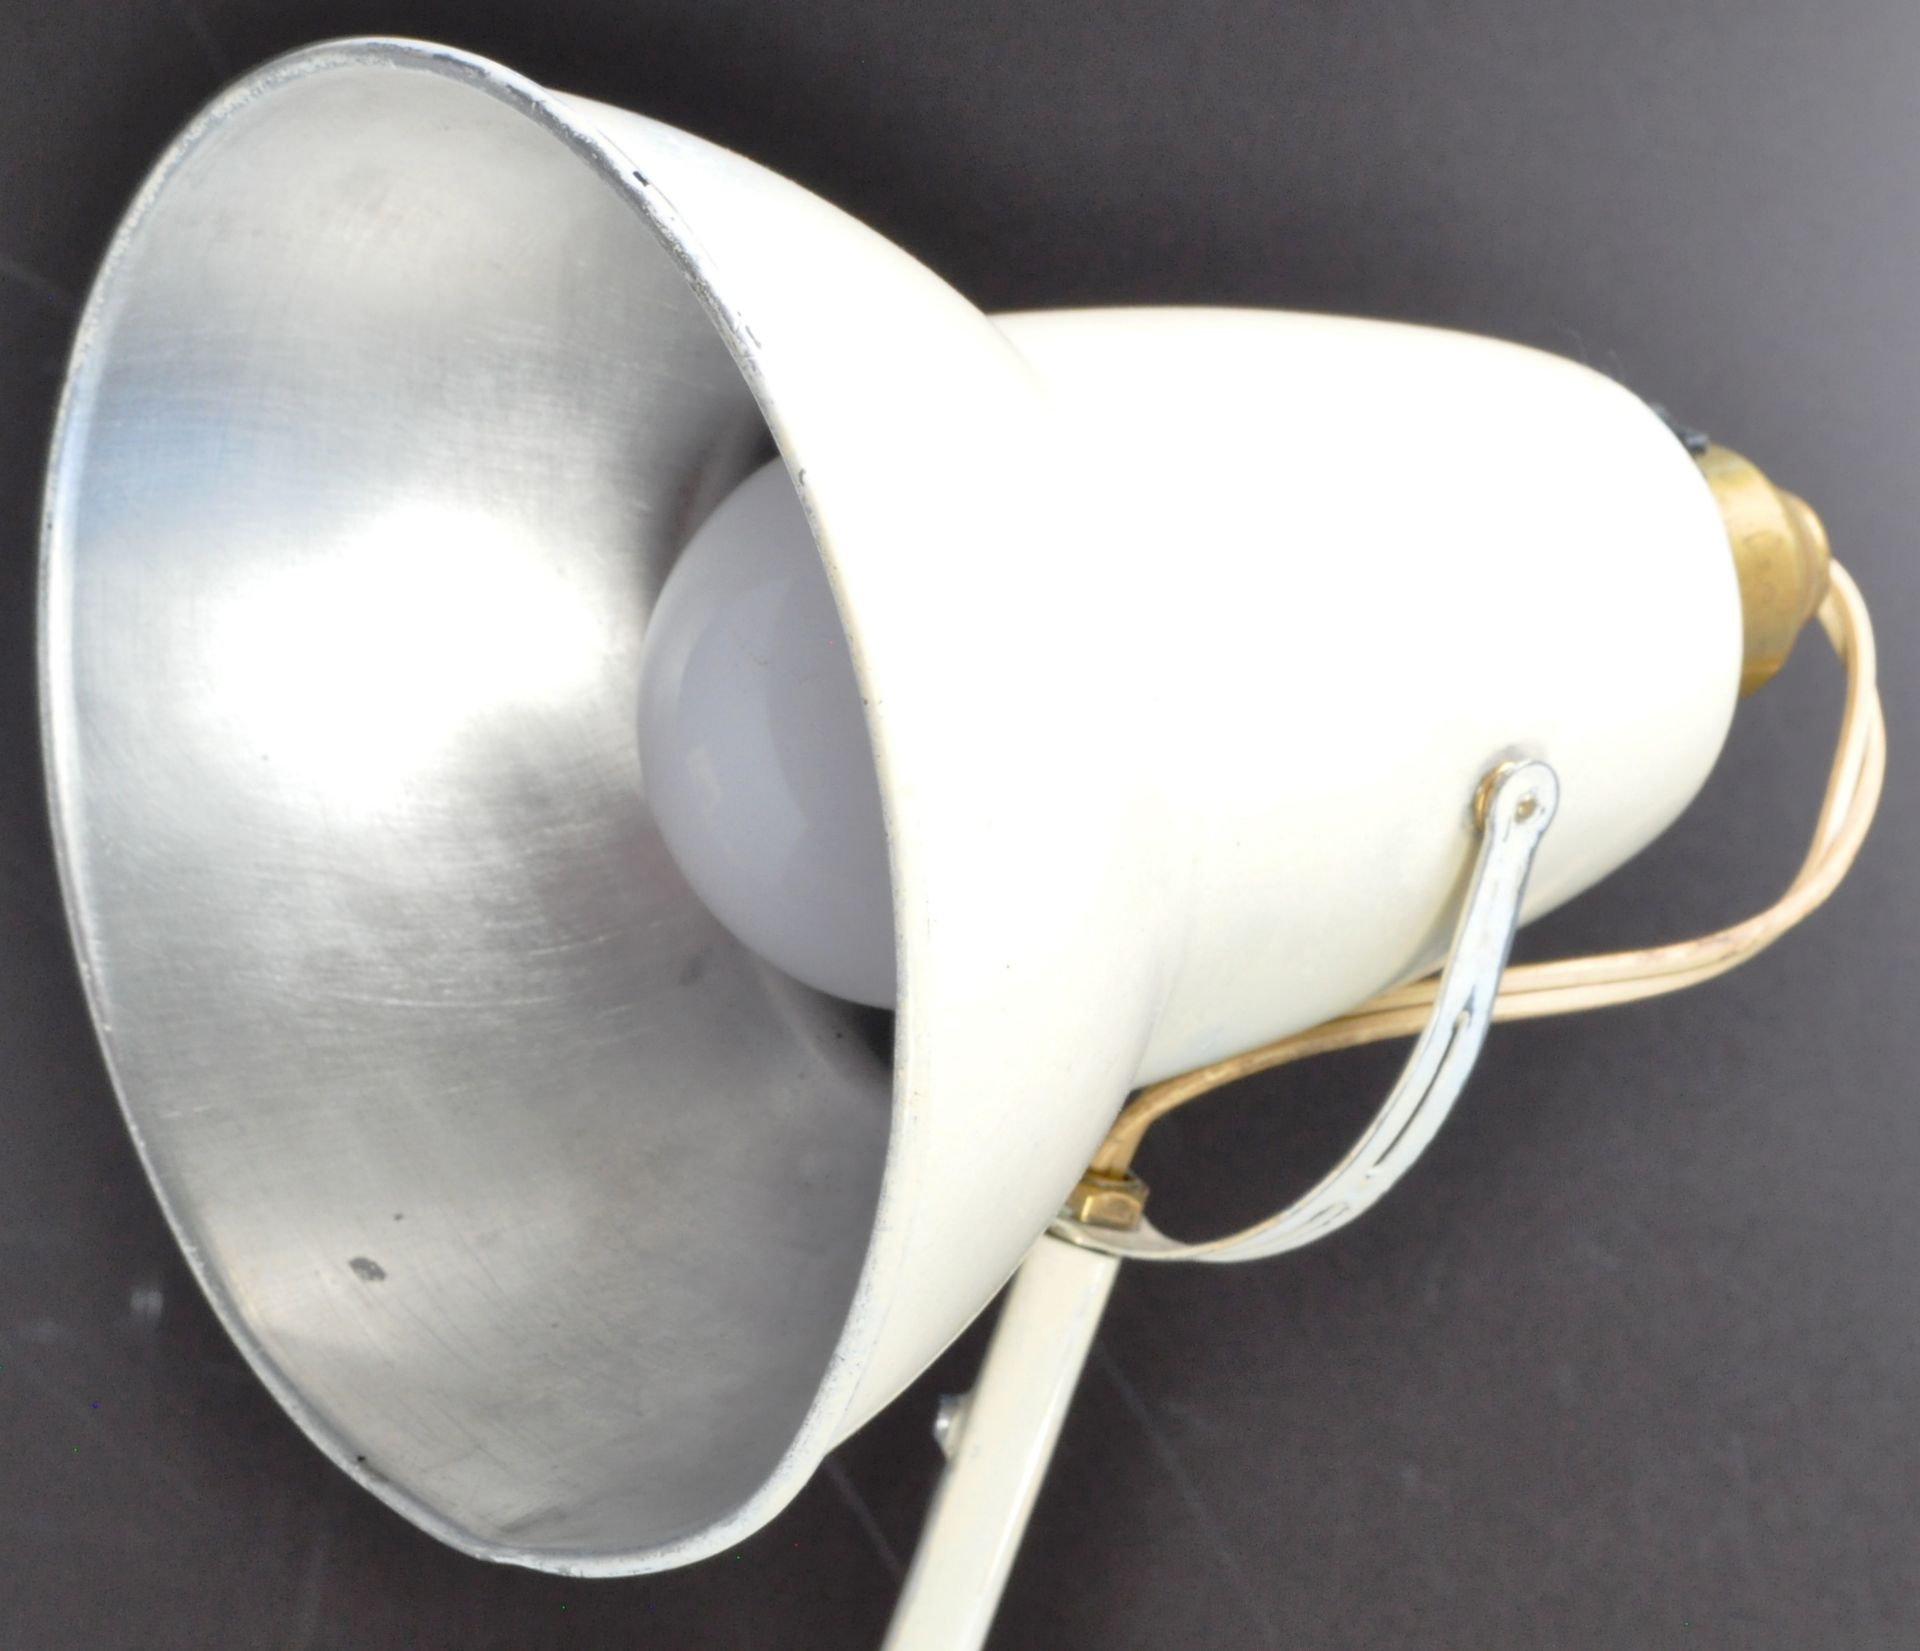 ORIGINAL HERBERT TERRY MODEL 1227 ANGLEPOISE LAMP - Image 2 of 6